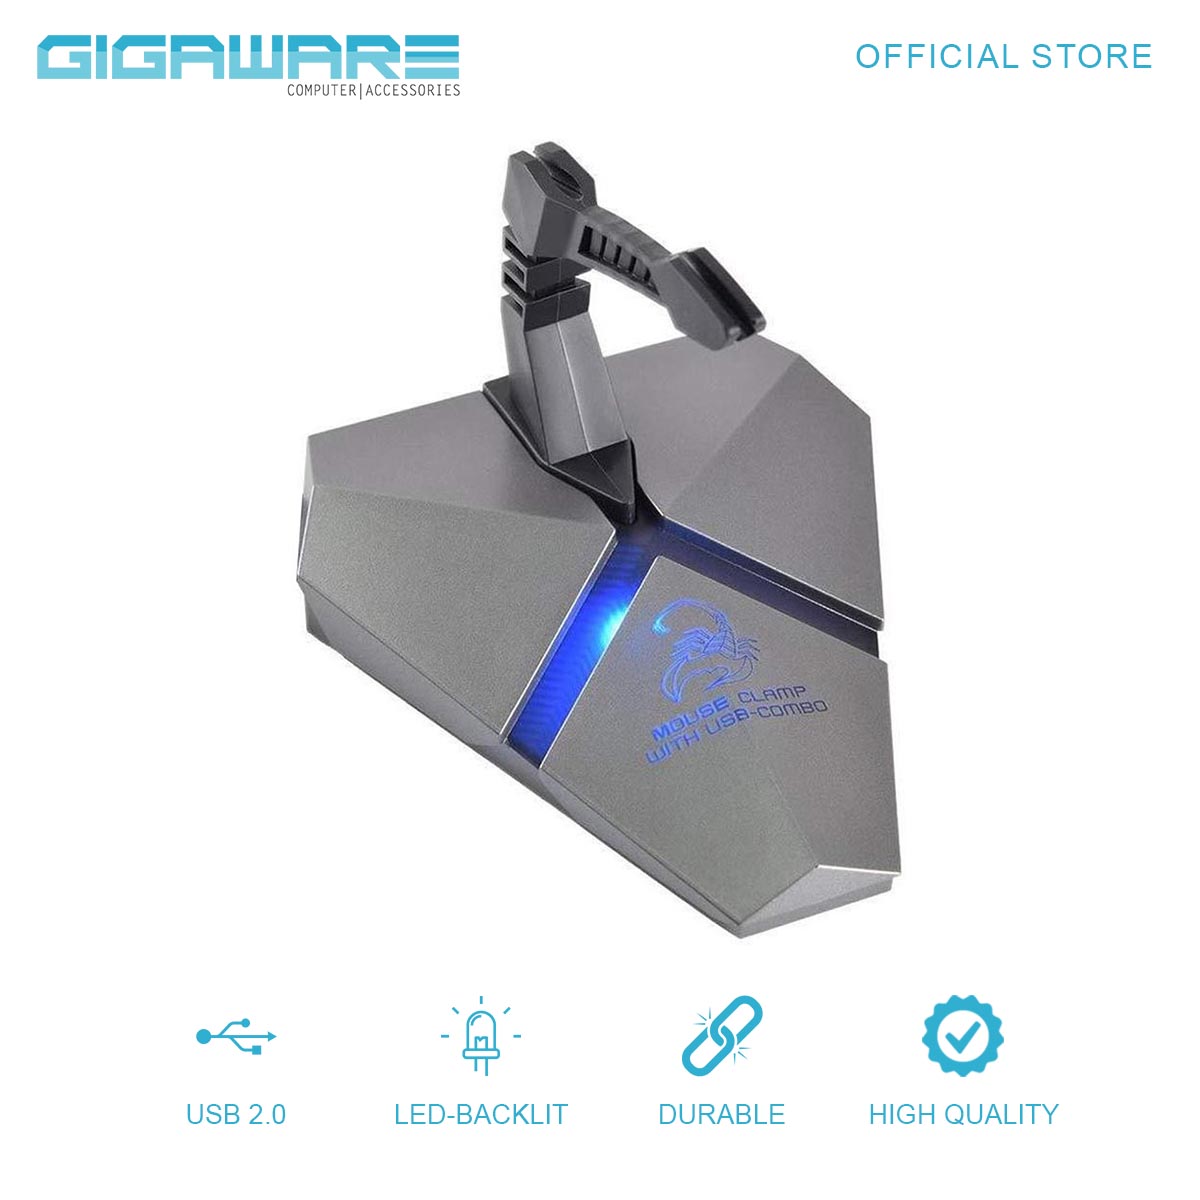 Grader celsius badning Antologi Gigaware Gaming Mouse Bungee 3-port 2.0 USB Hub SD Card Reader LED Hub  Cable Wire Organizer | Lazada PH